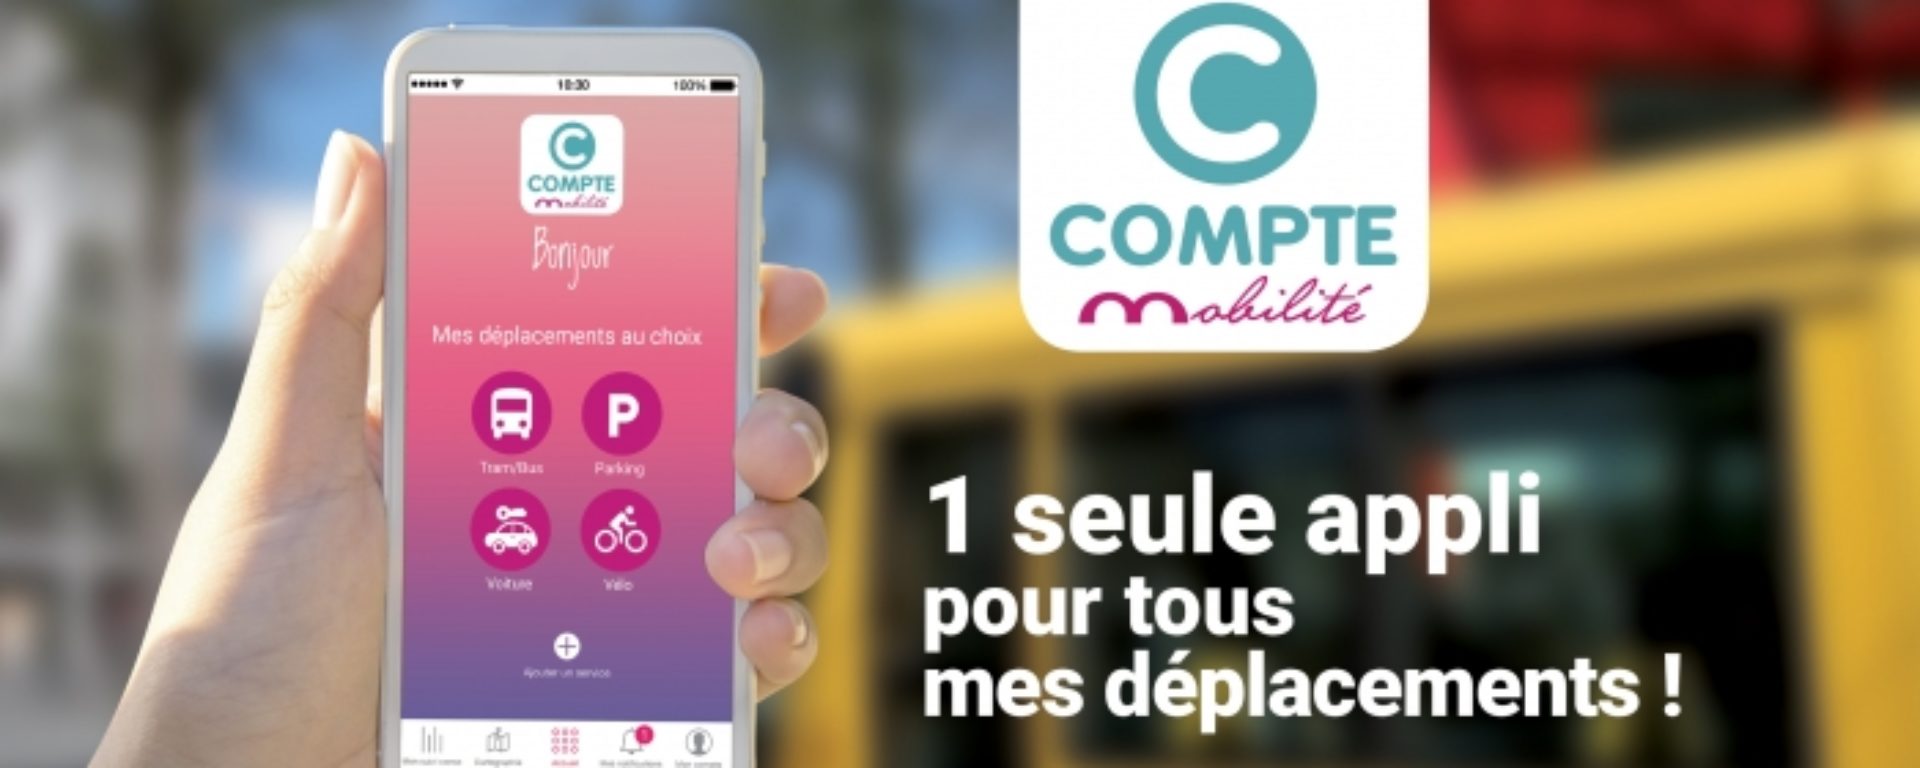 Transdev_Compte-mobilite_Mulhouse_MaaS